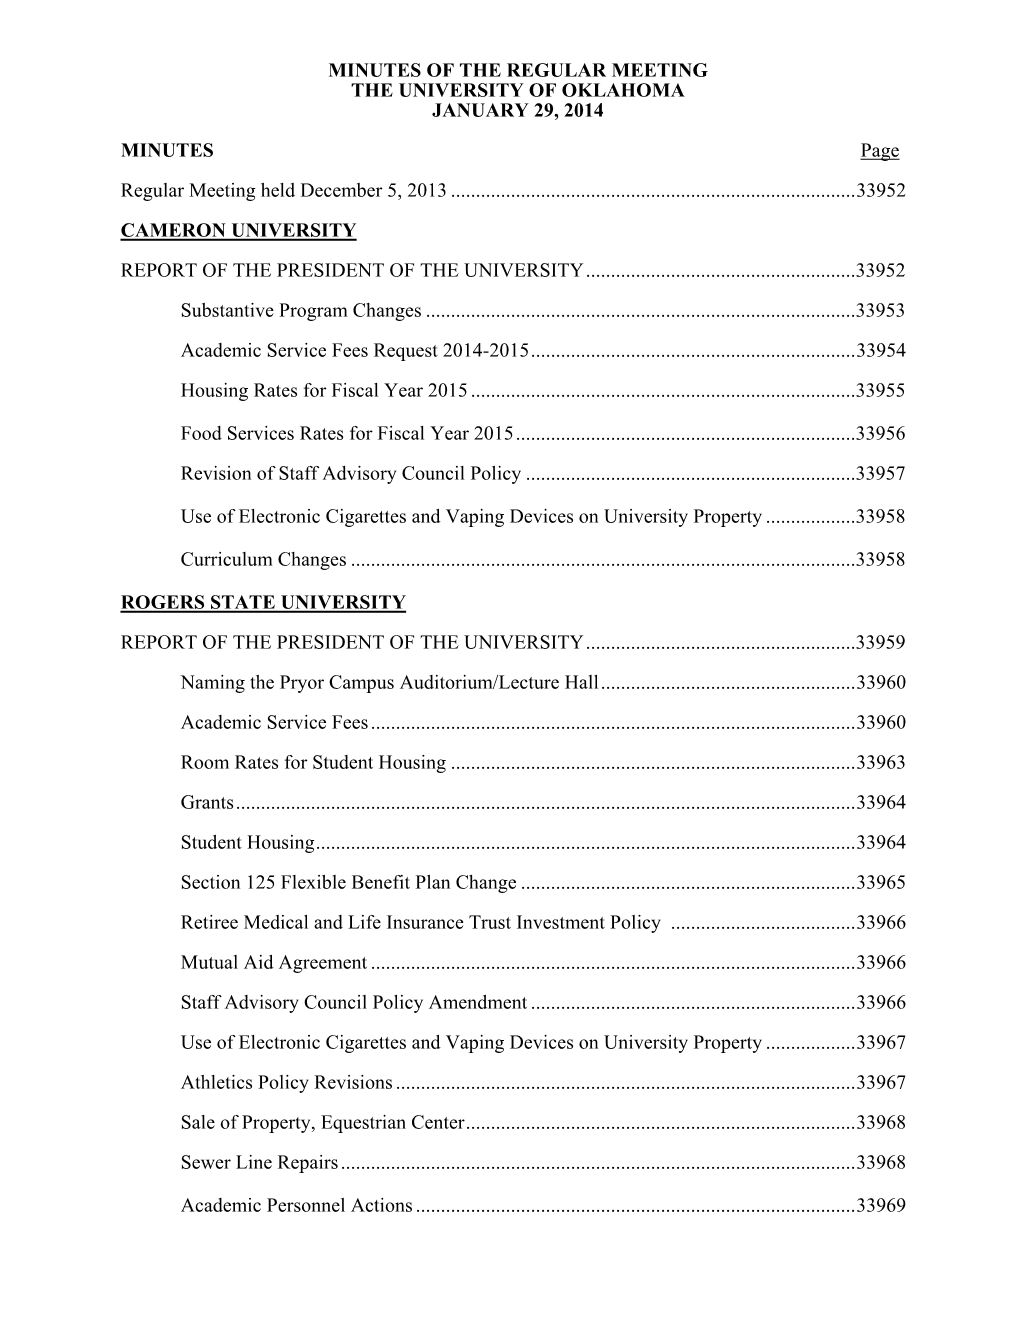 Minutes of the Regular Meeting the University of Oklahoma January 29, 2014